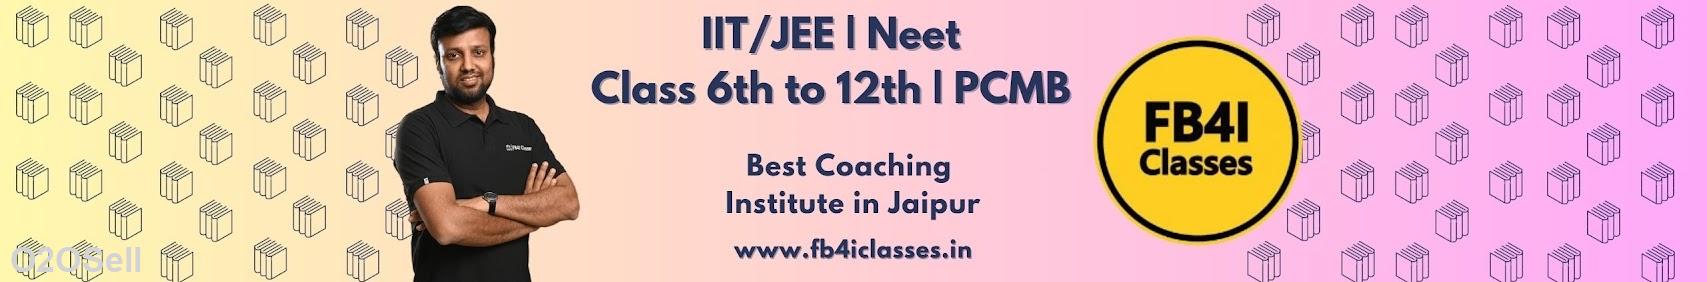 FB4i Classes - Best IIT & NEET Coaching in Jaipur - Cover Image